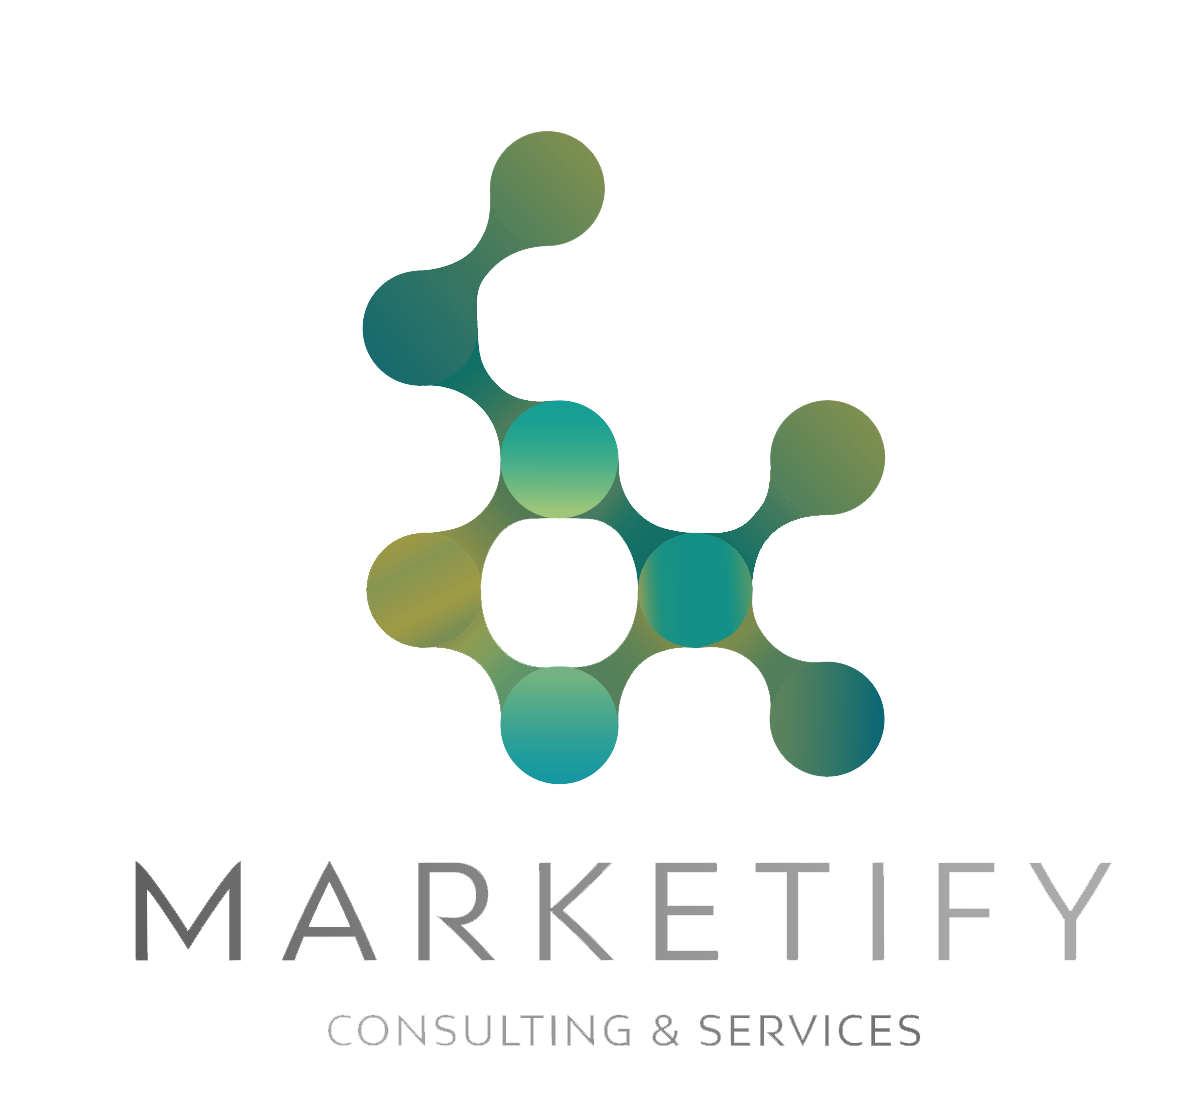 Logo marketify client : page intelligence artificielle